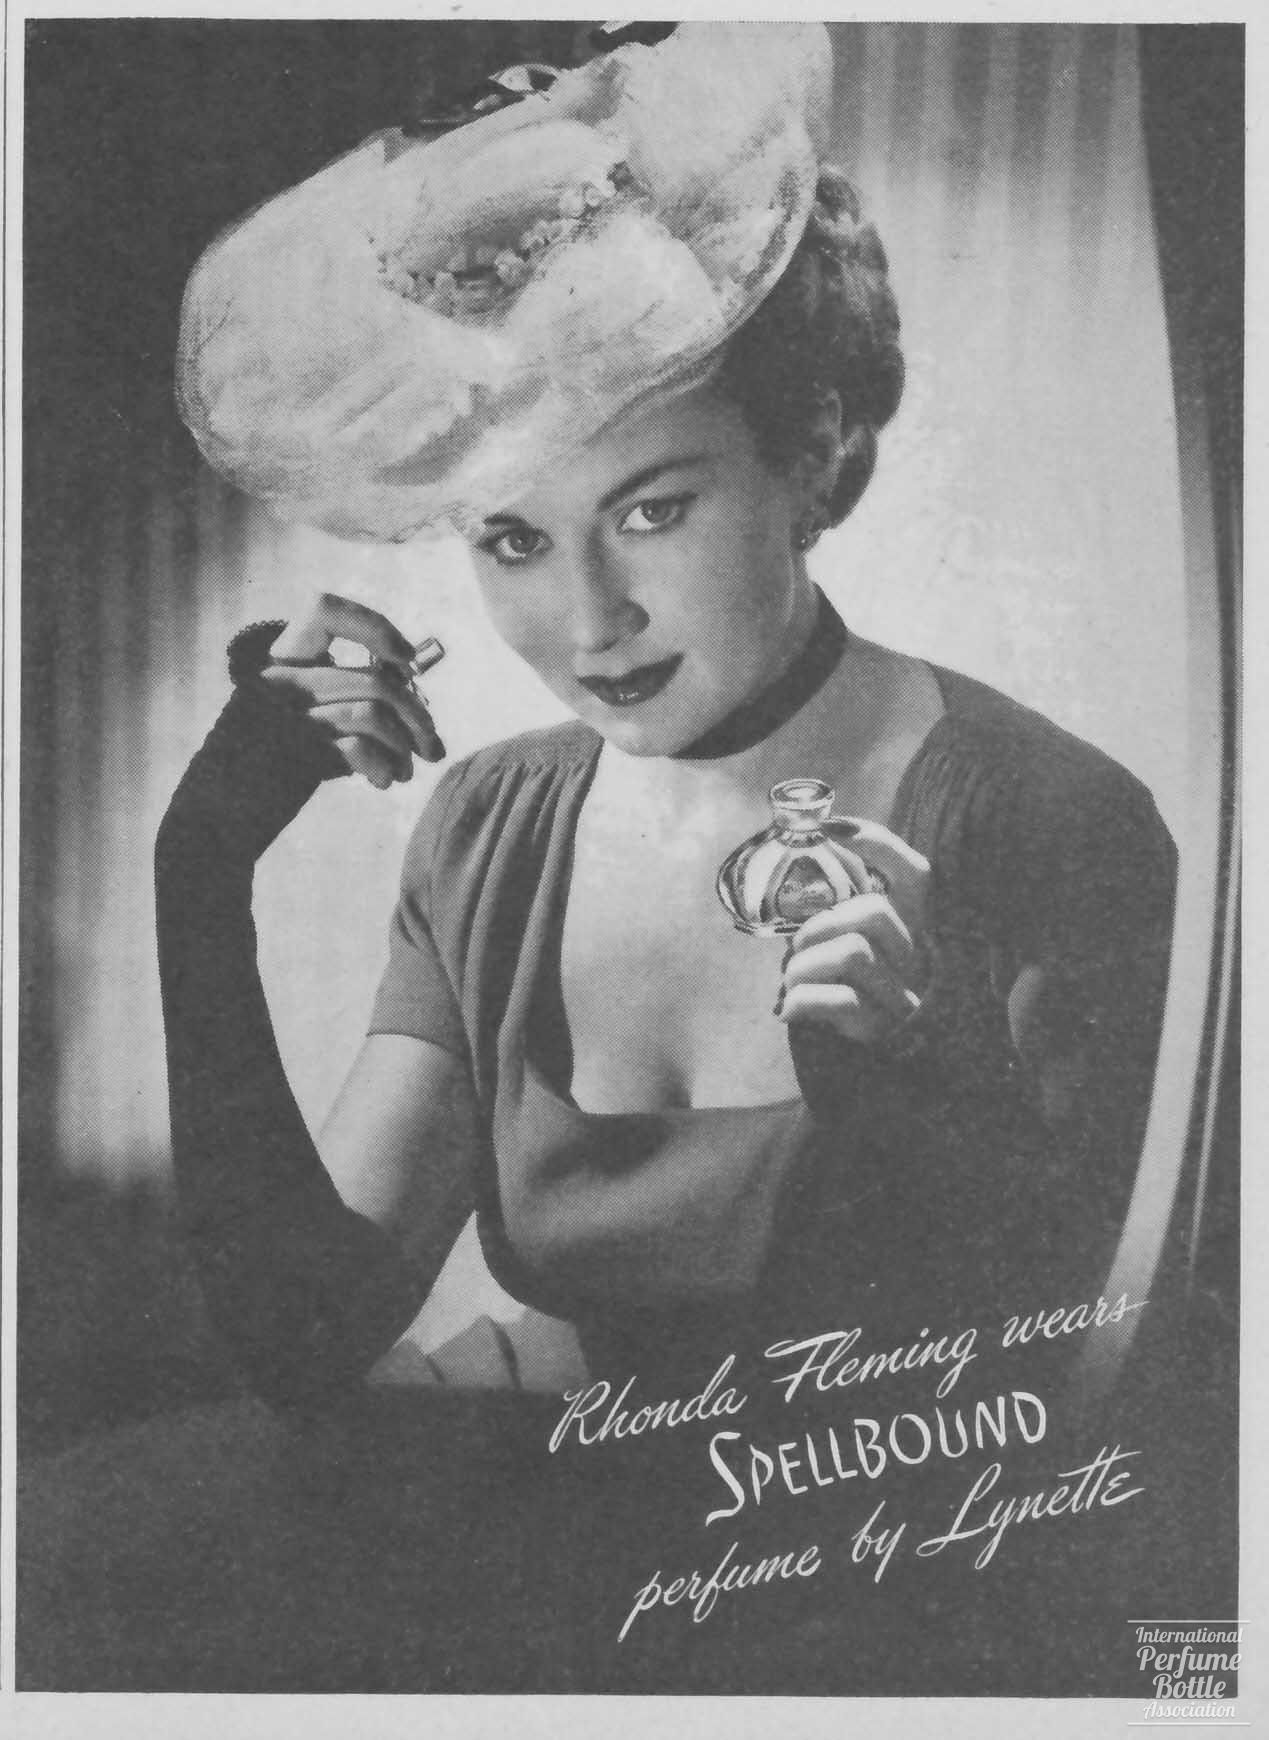 "Spellbound" by Lynette Advertisement - 1945